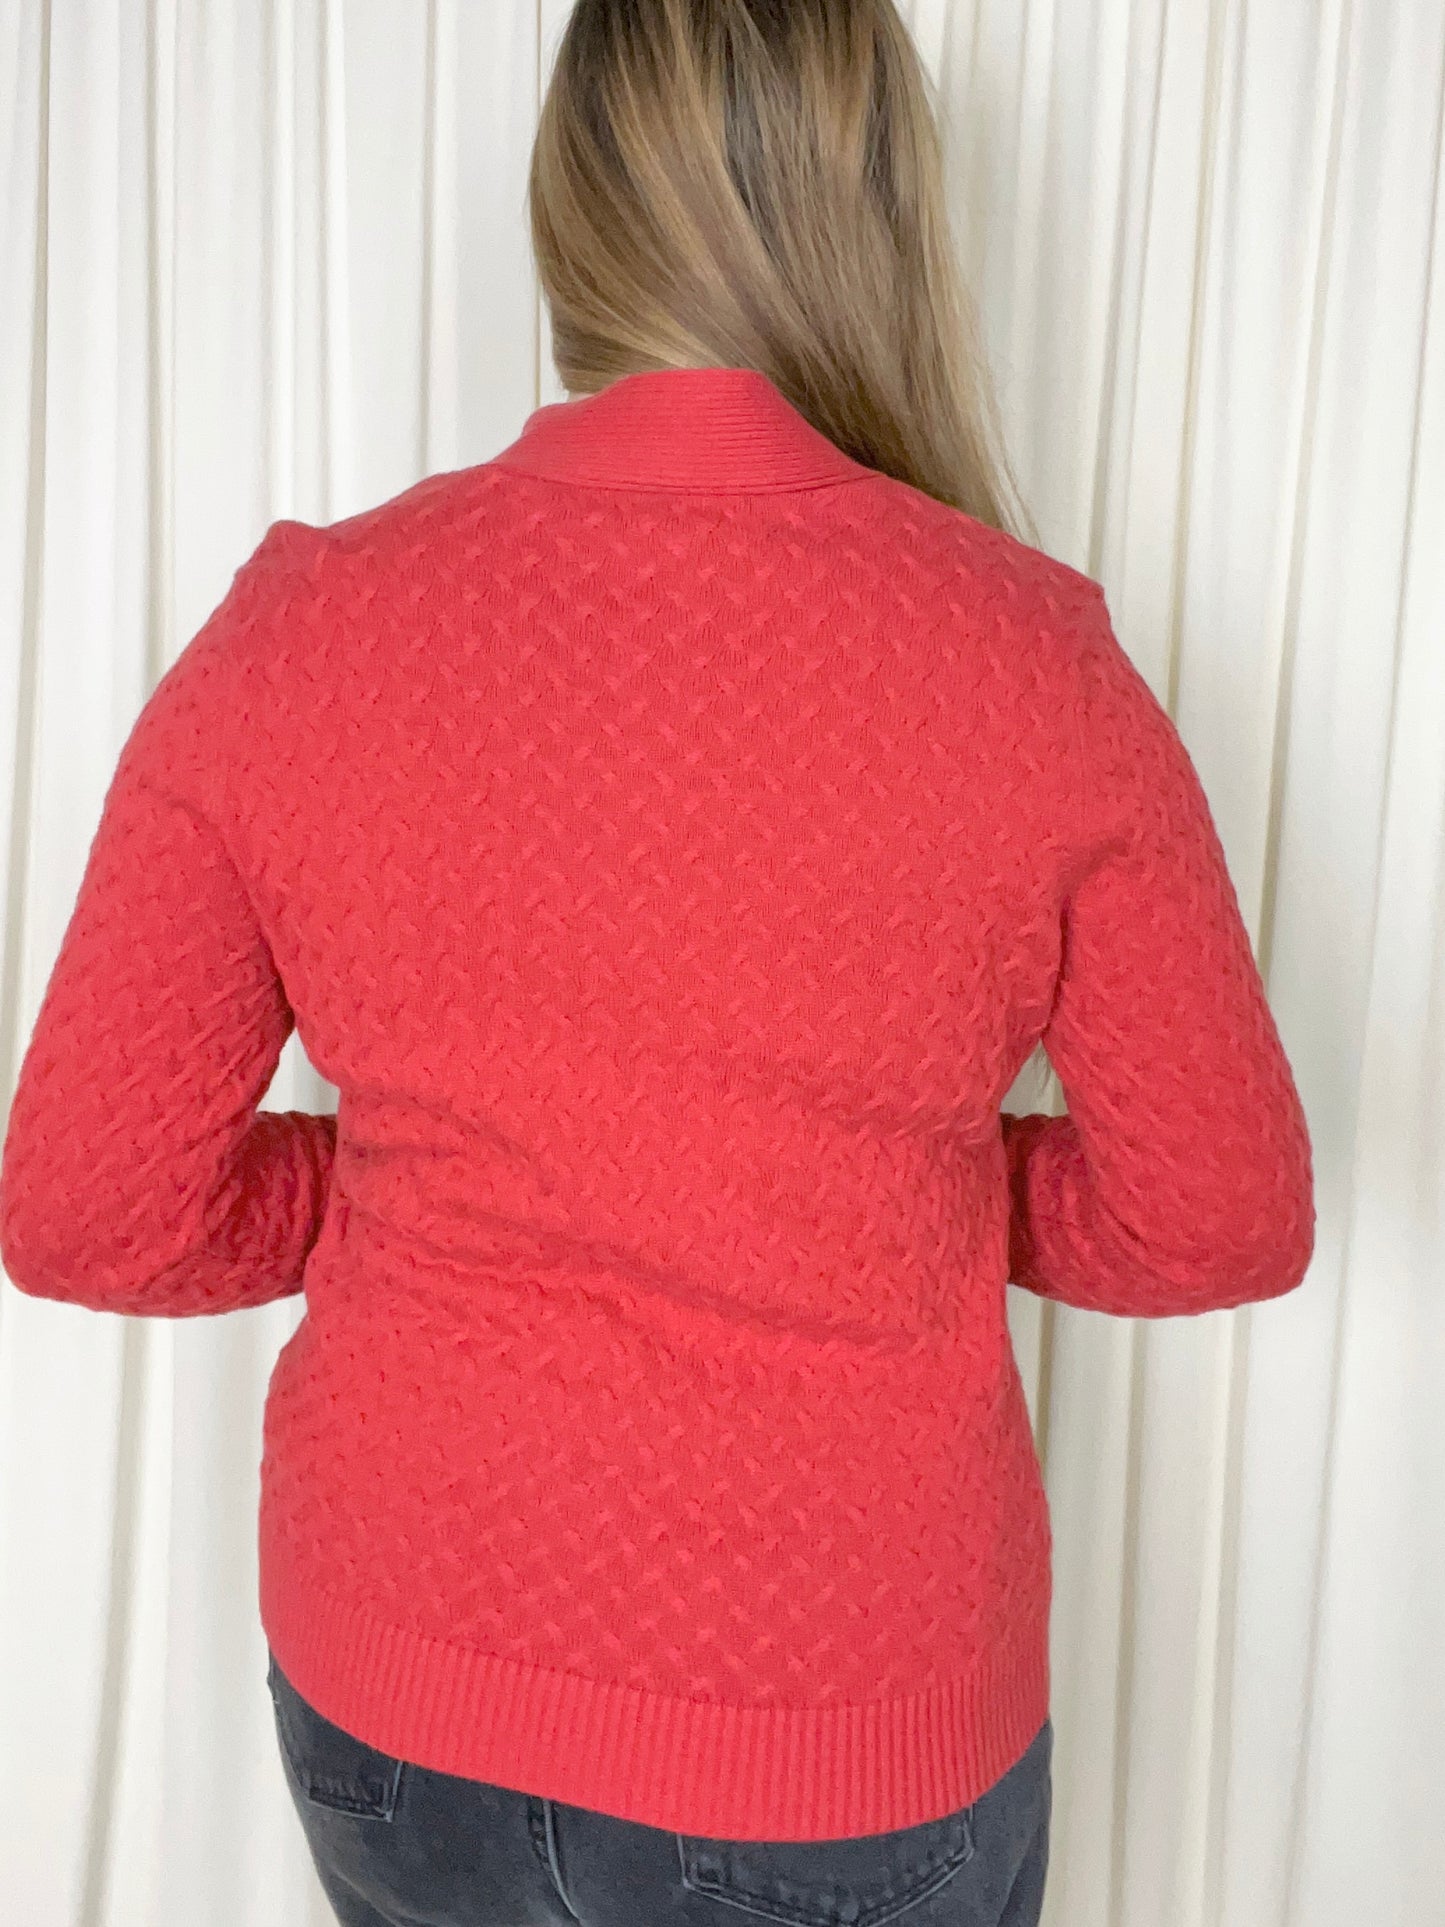 Orange Textured Sweater - Large